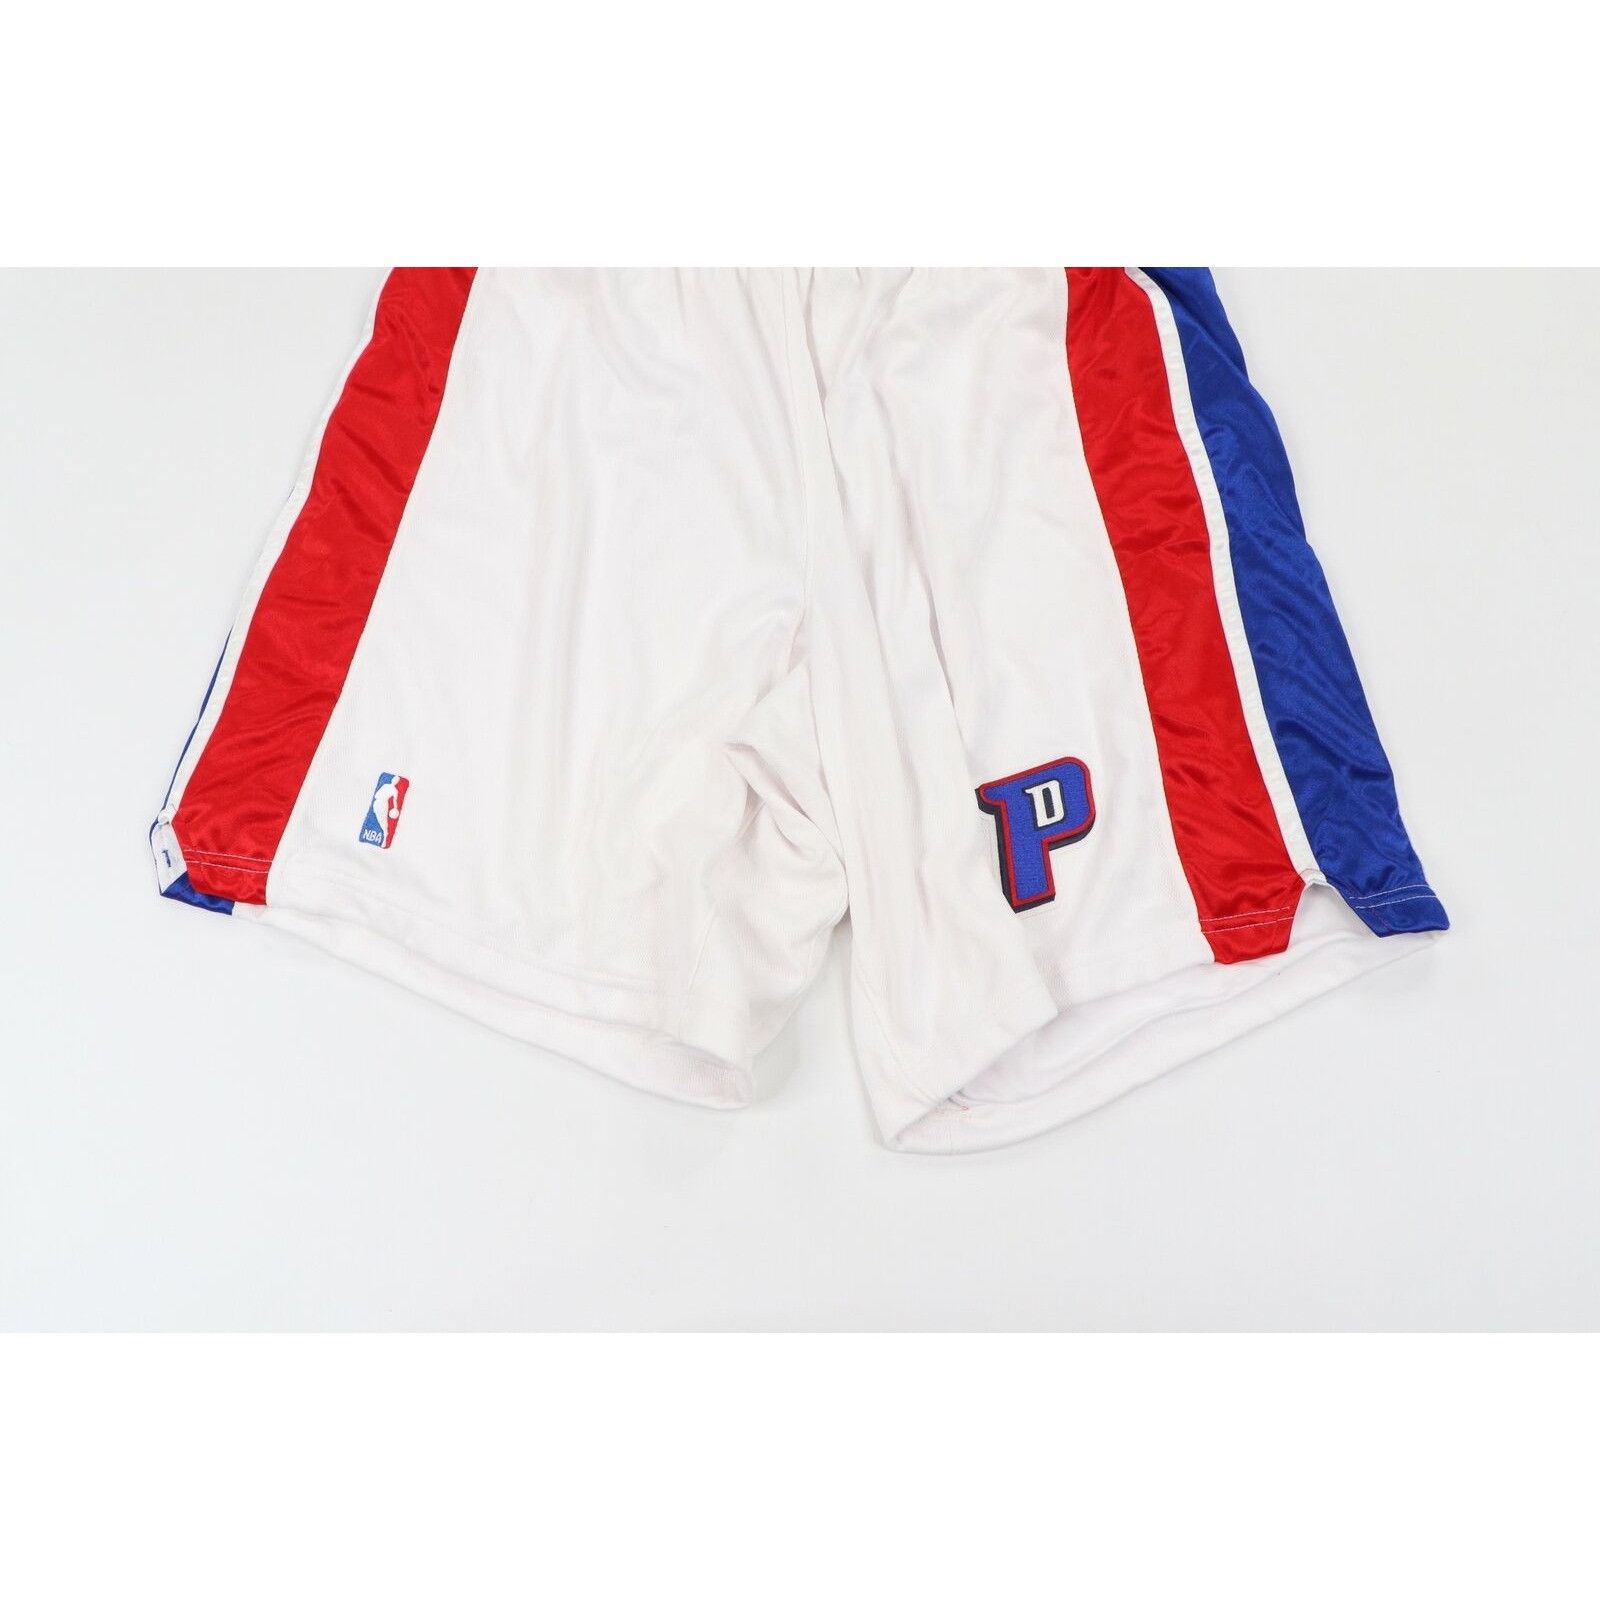 Adidas Adidas NBA Detroit Pistons Basketball Pro Cut Game Shorts Size US 38 / EU 54 - 3 Thumbnail